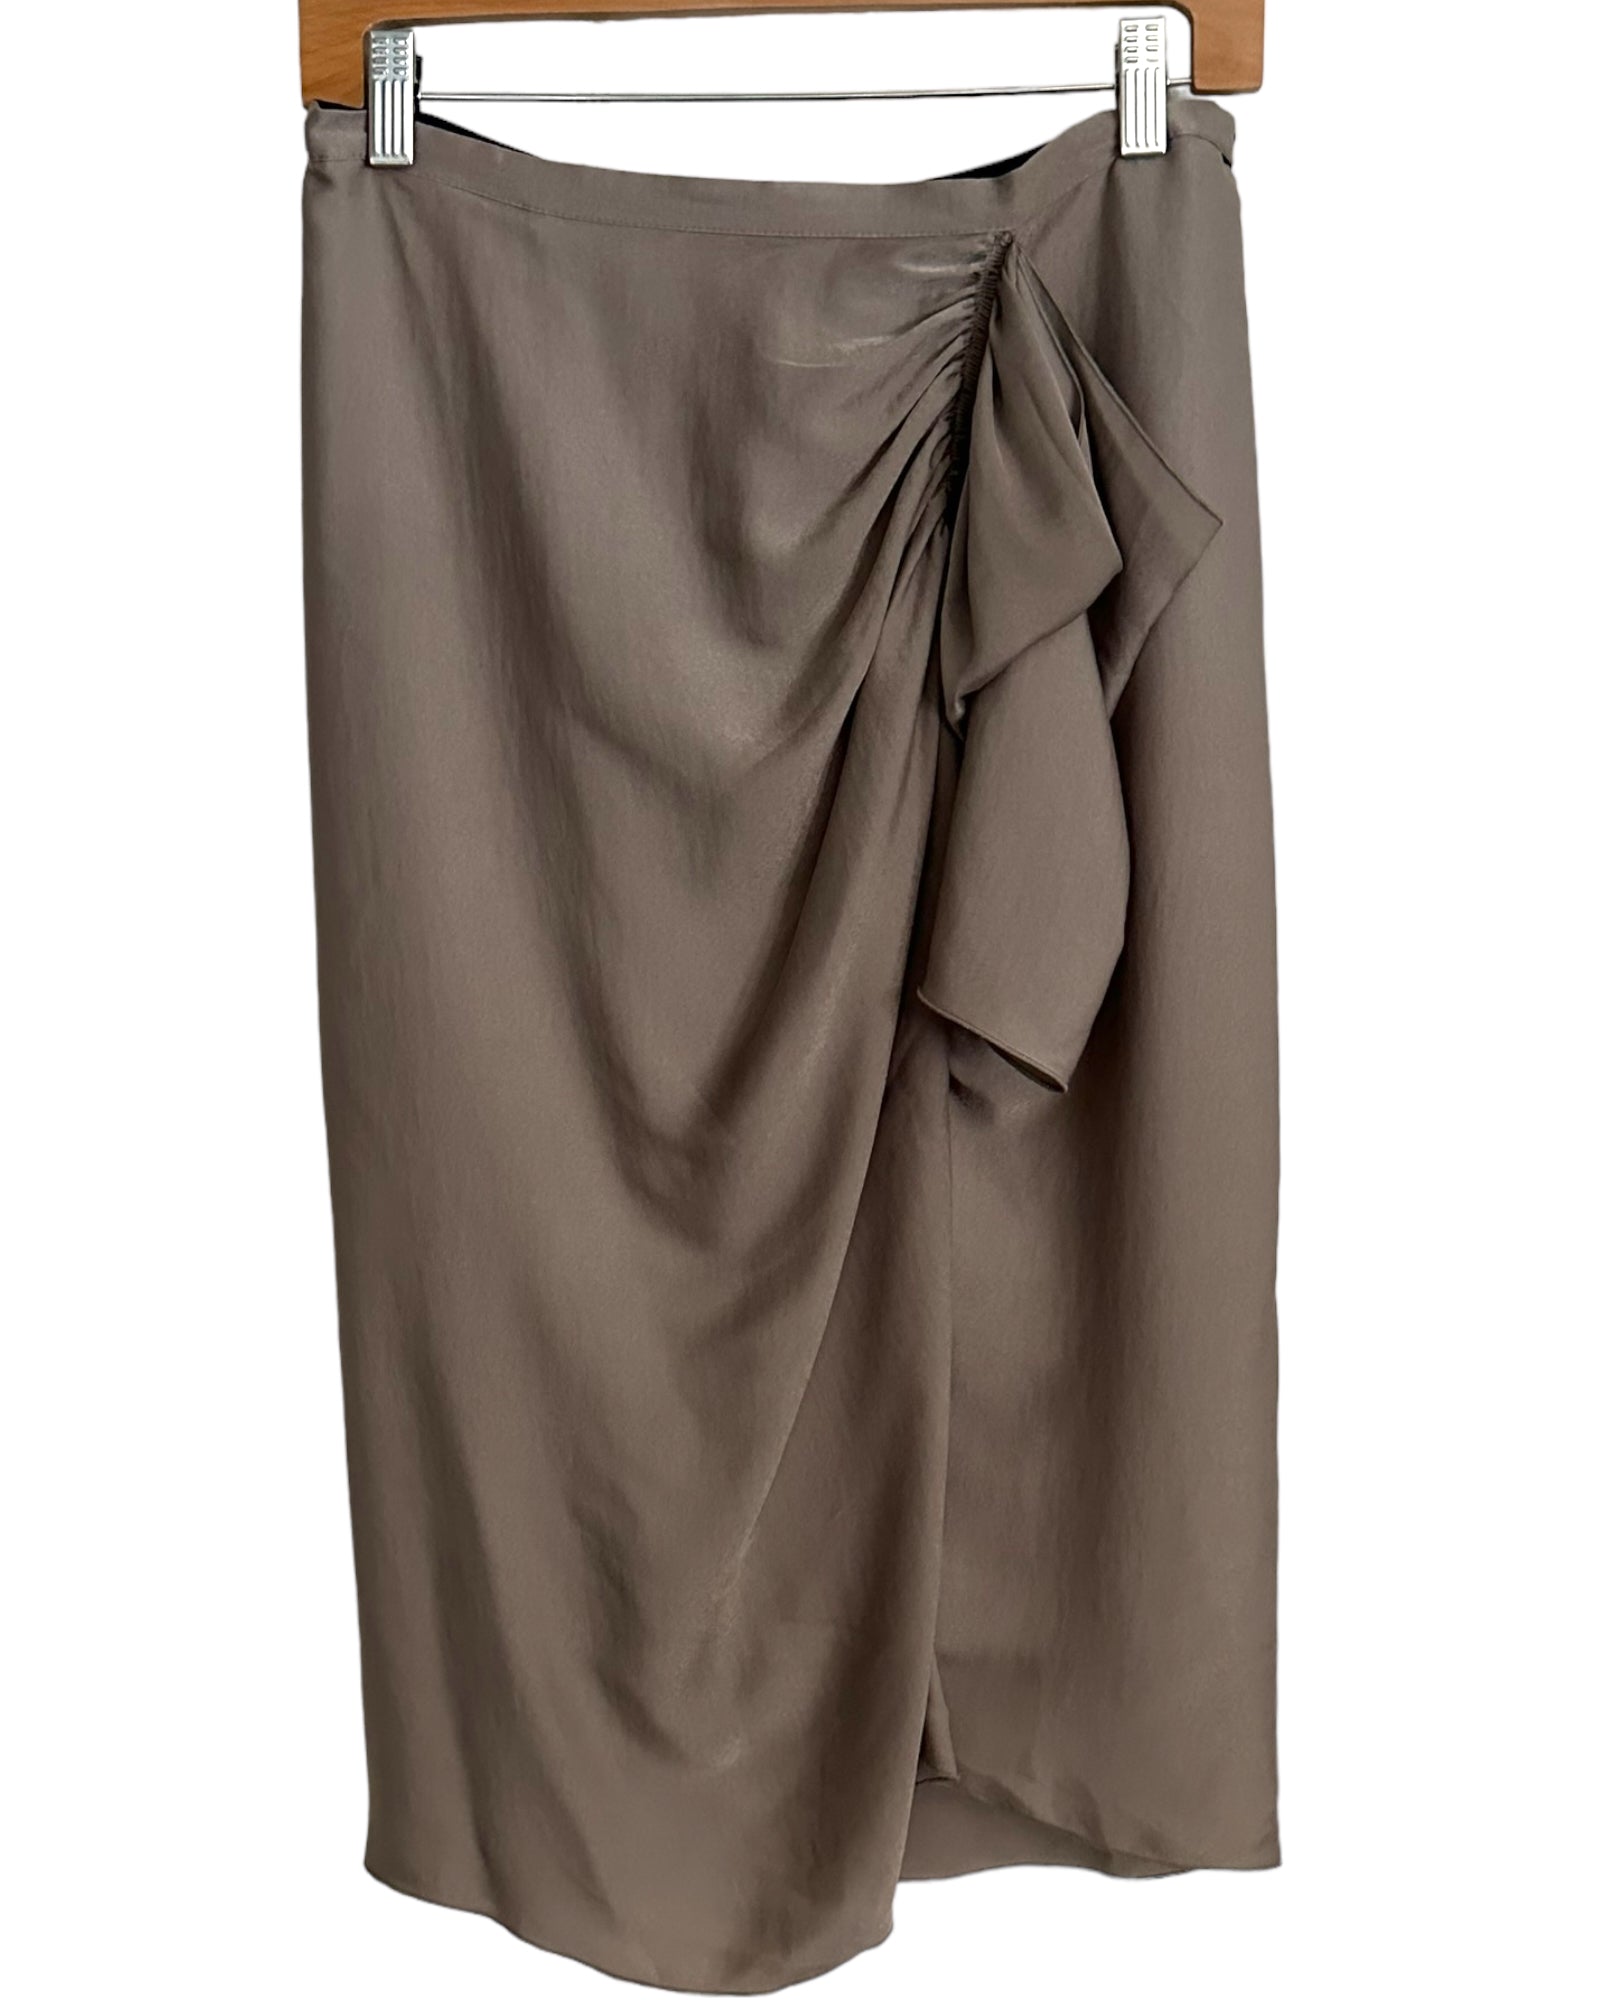 Warm Autumn BCBGMAXAZRIA gray silky ruffle skirt 